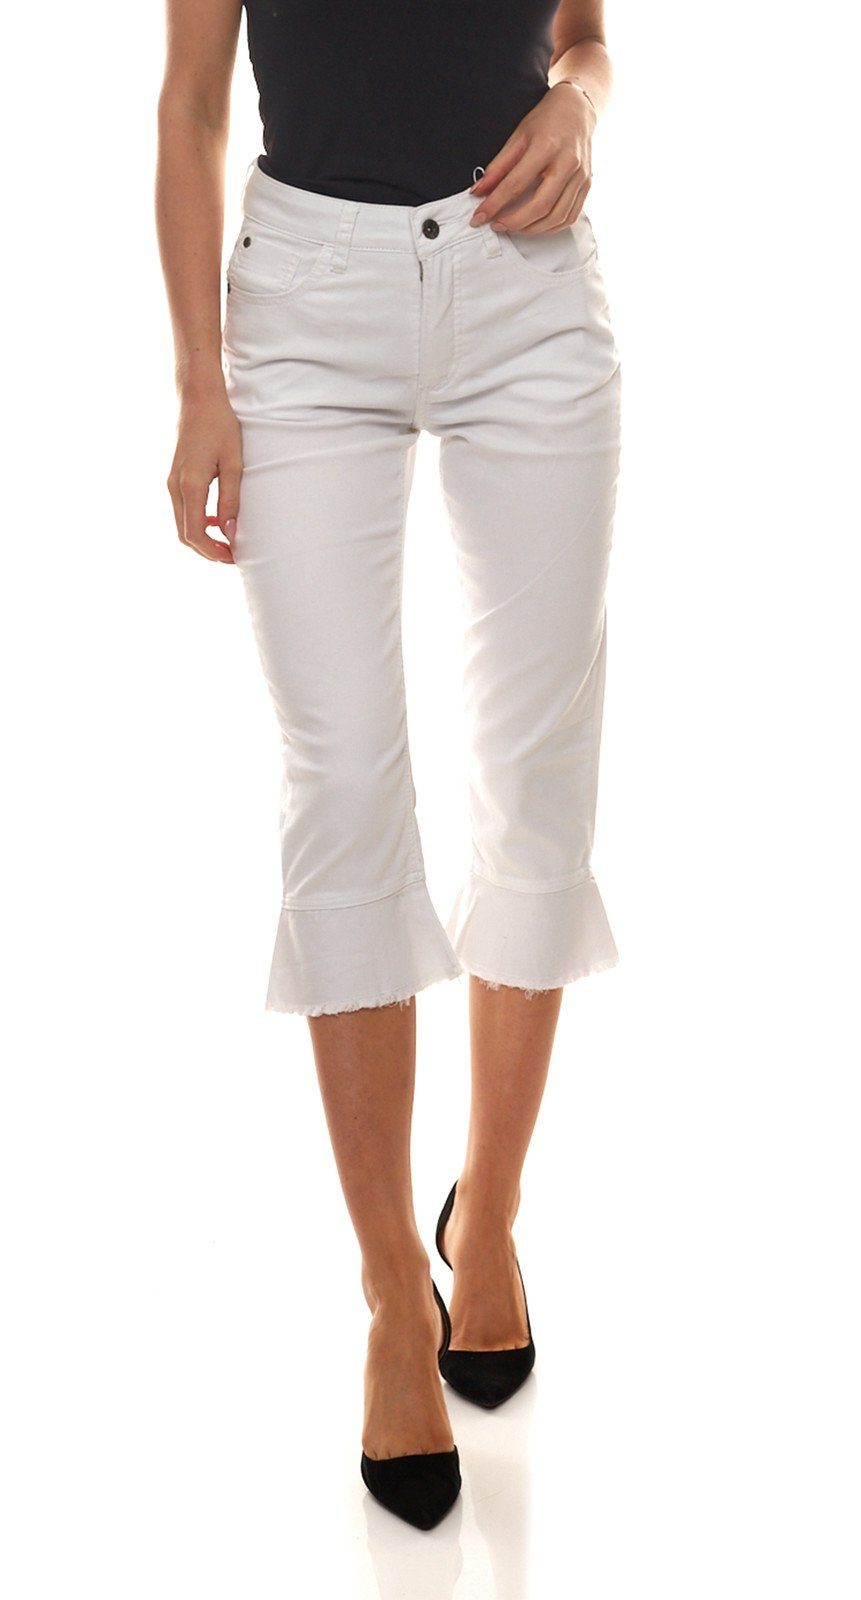 Vision Fitness CLAIRE WOMAN Caprihose CLAIRE WOMAN Stoff-Hose modische Damen Capri-Jeans mit ausgefranstem Volant Freizeit-Hose Weiß